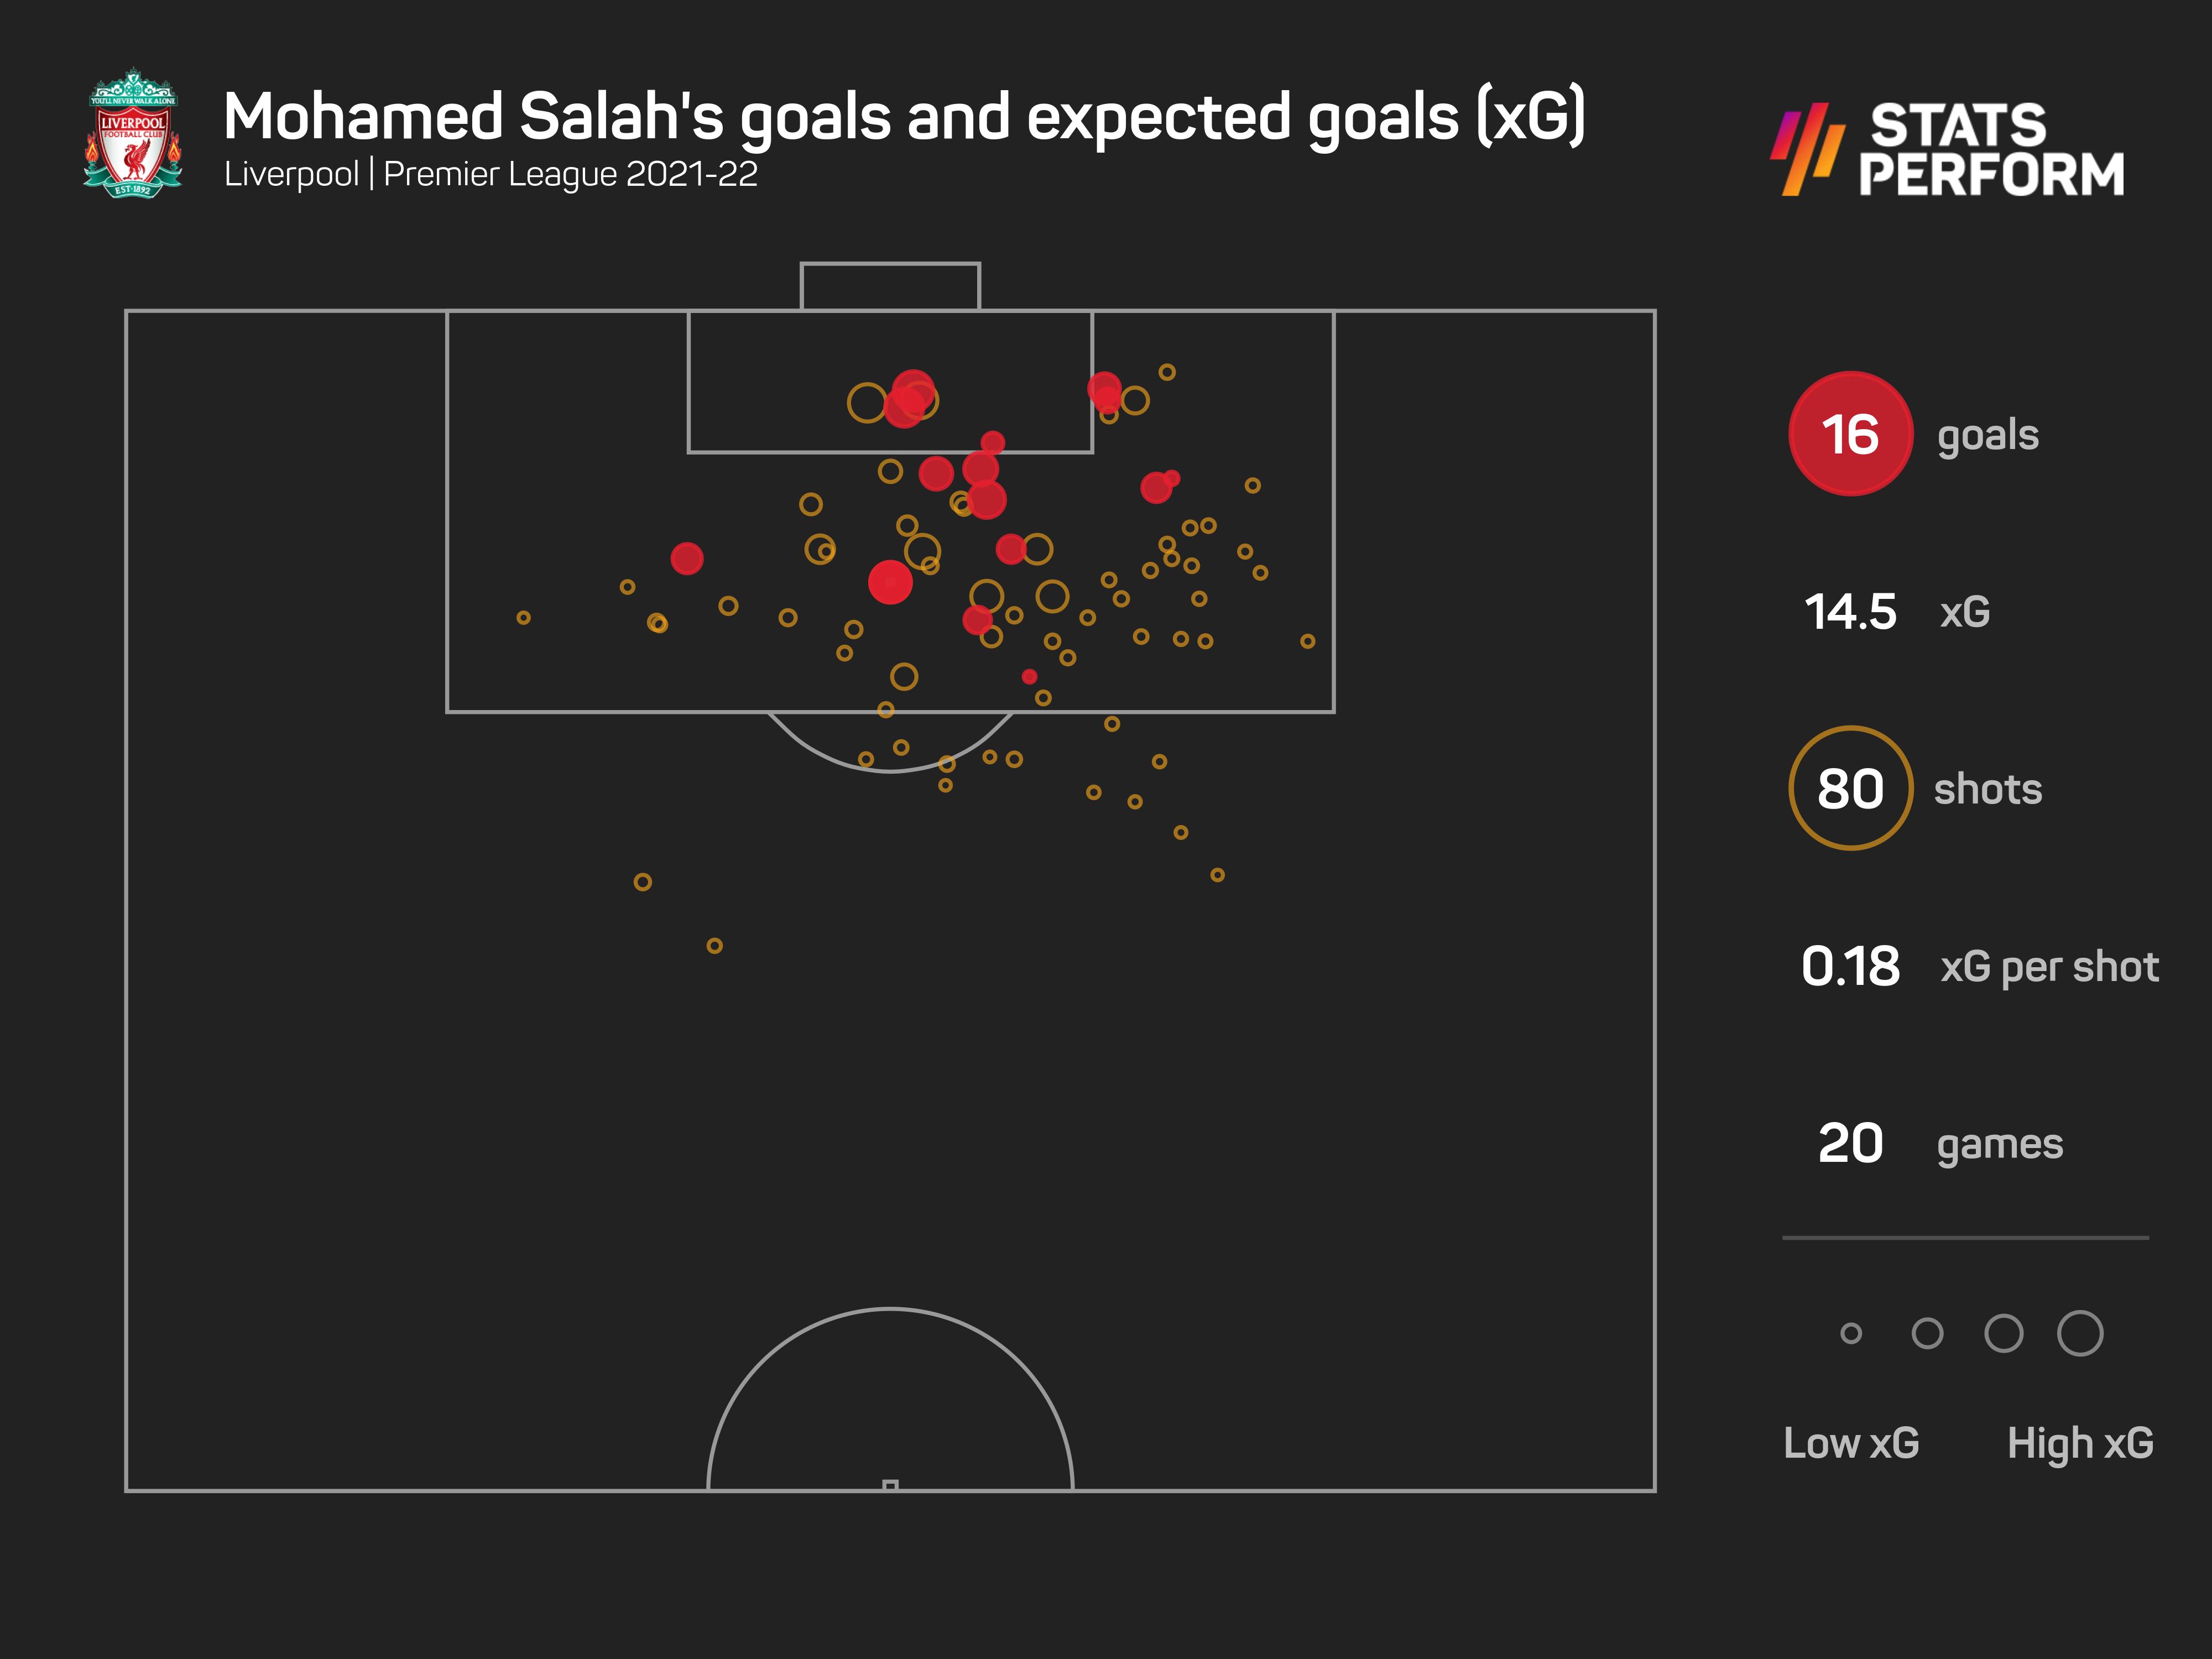 Mohamed Salah this season